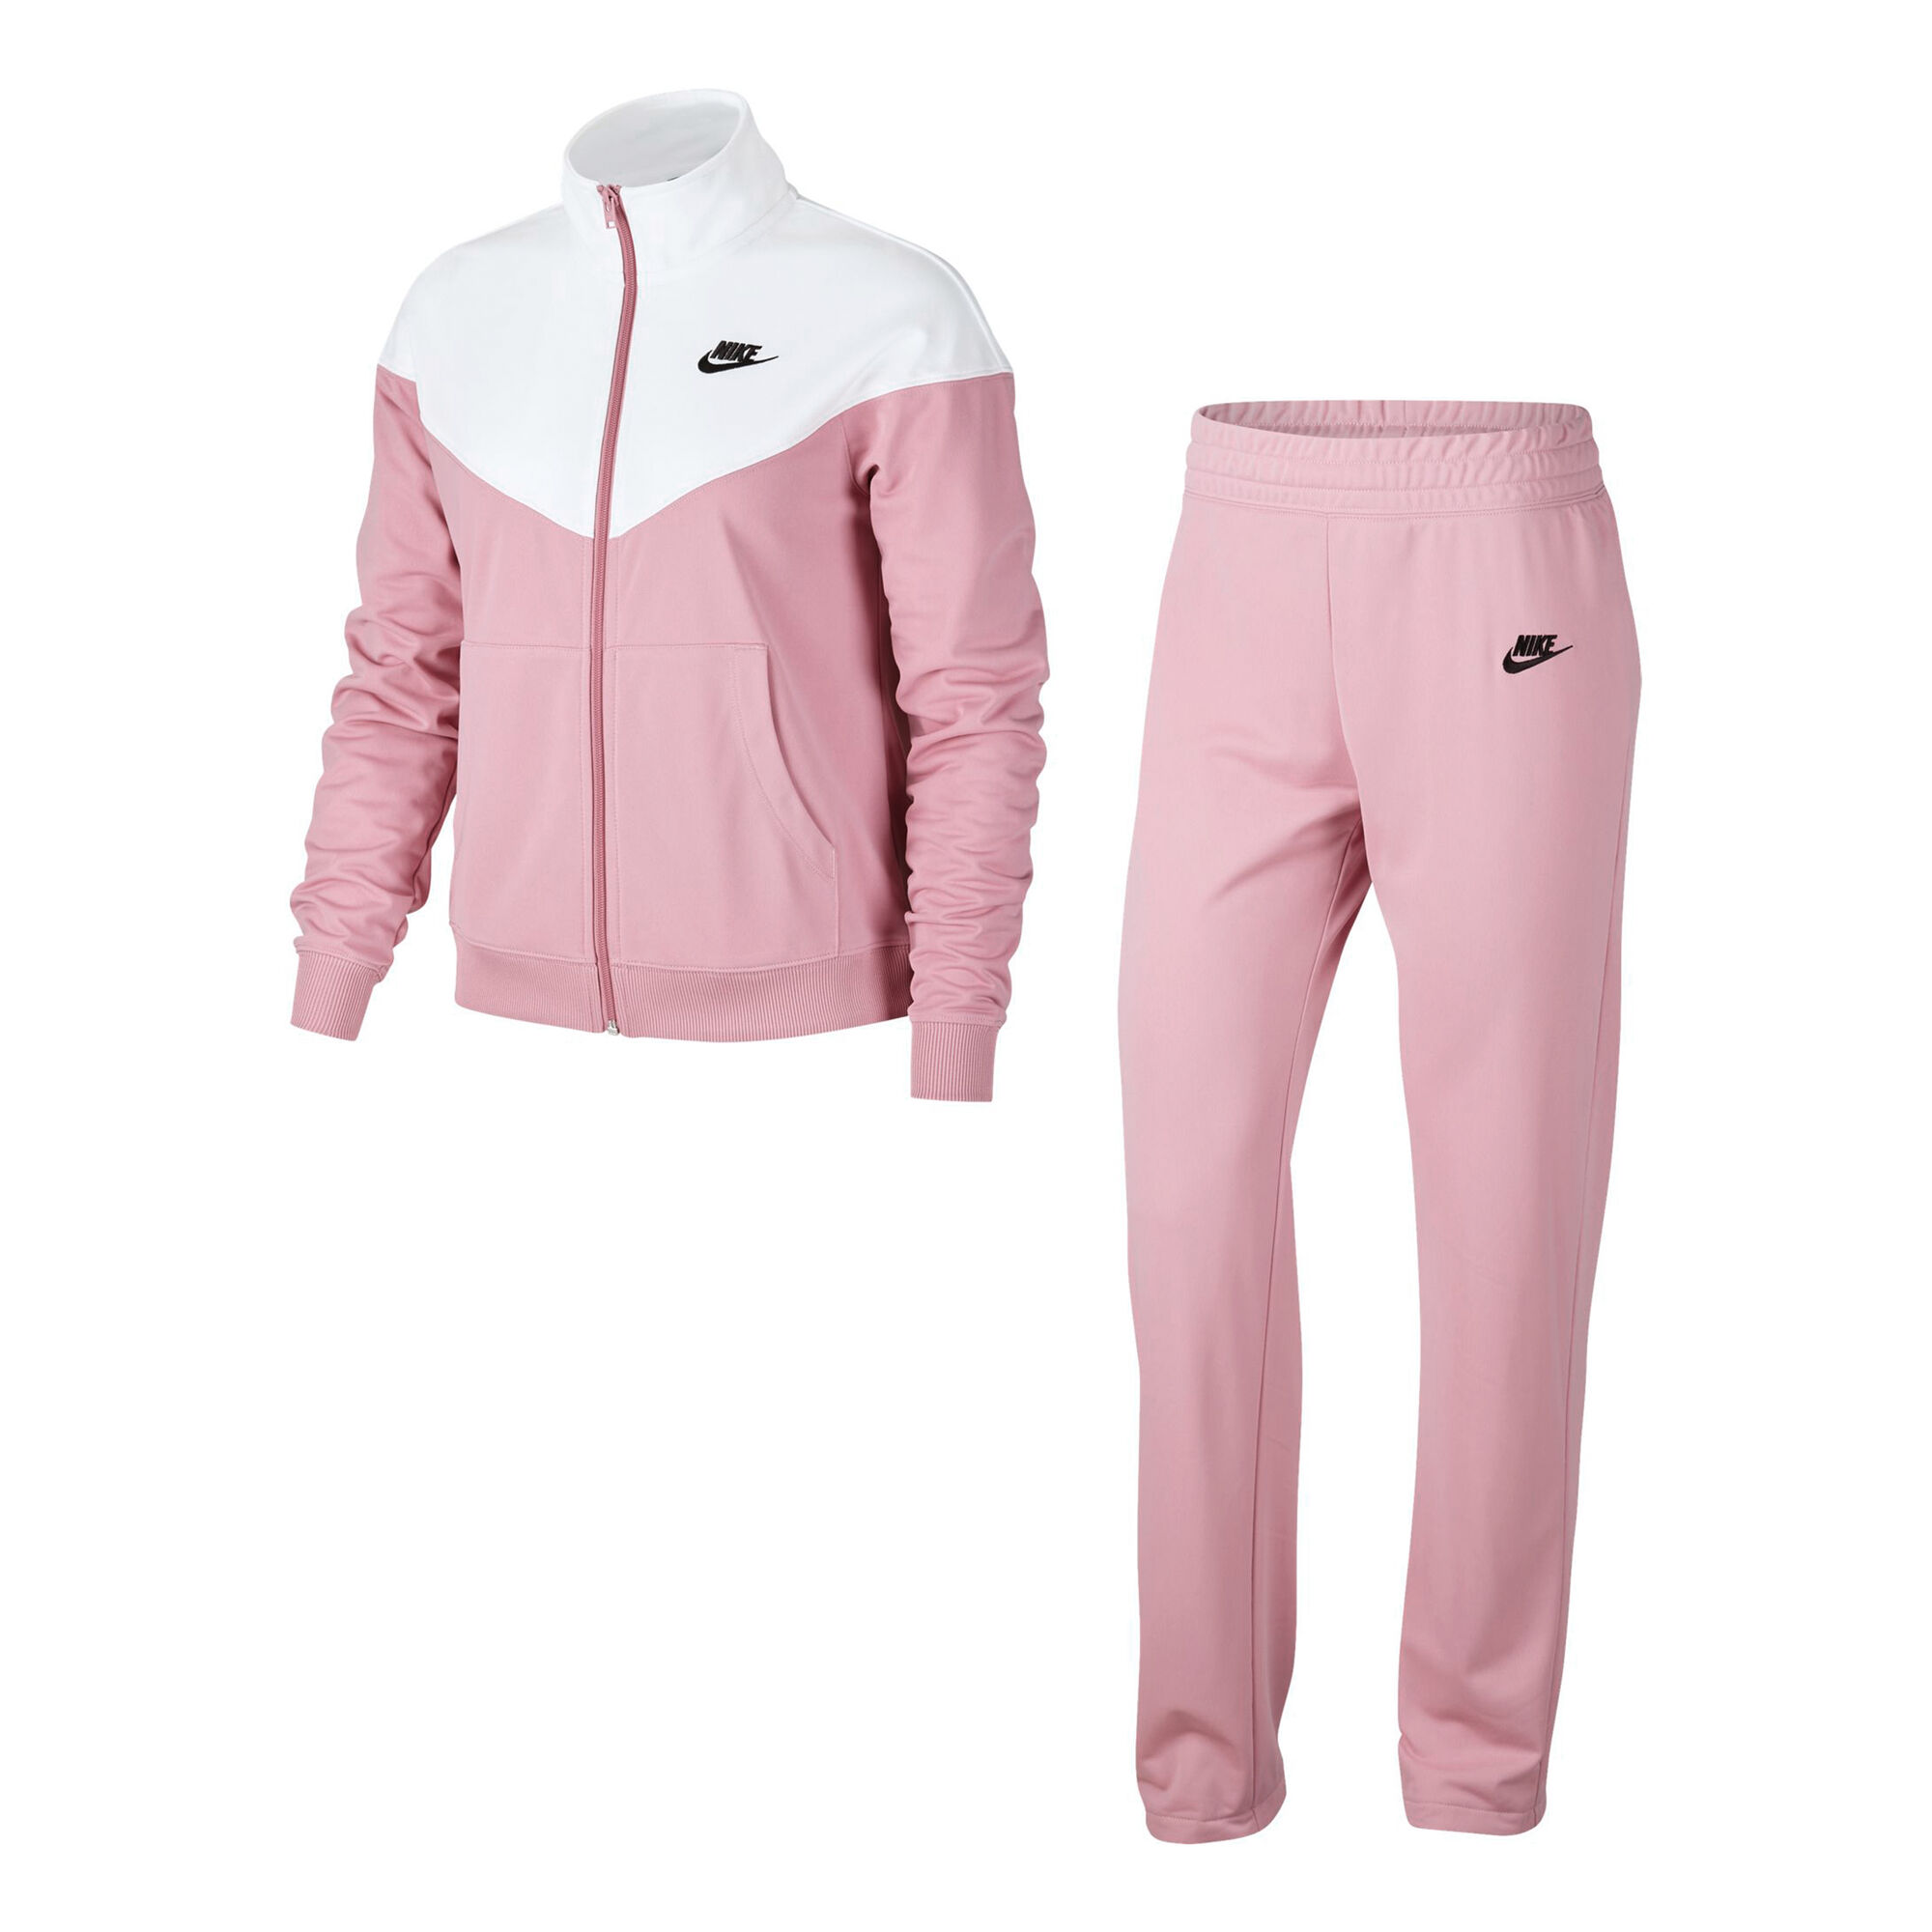 Buy Nike Sportswear Tuta Da Allenamento Donna Rosa, Bianco online